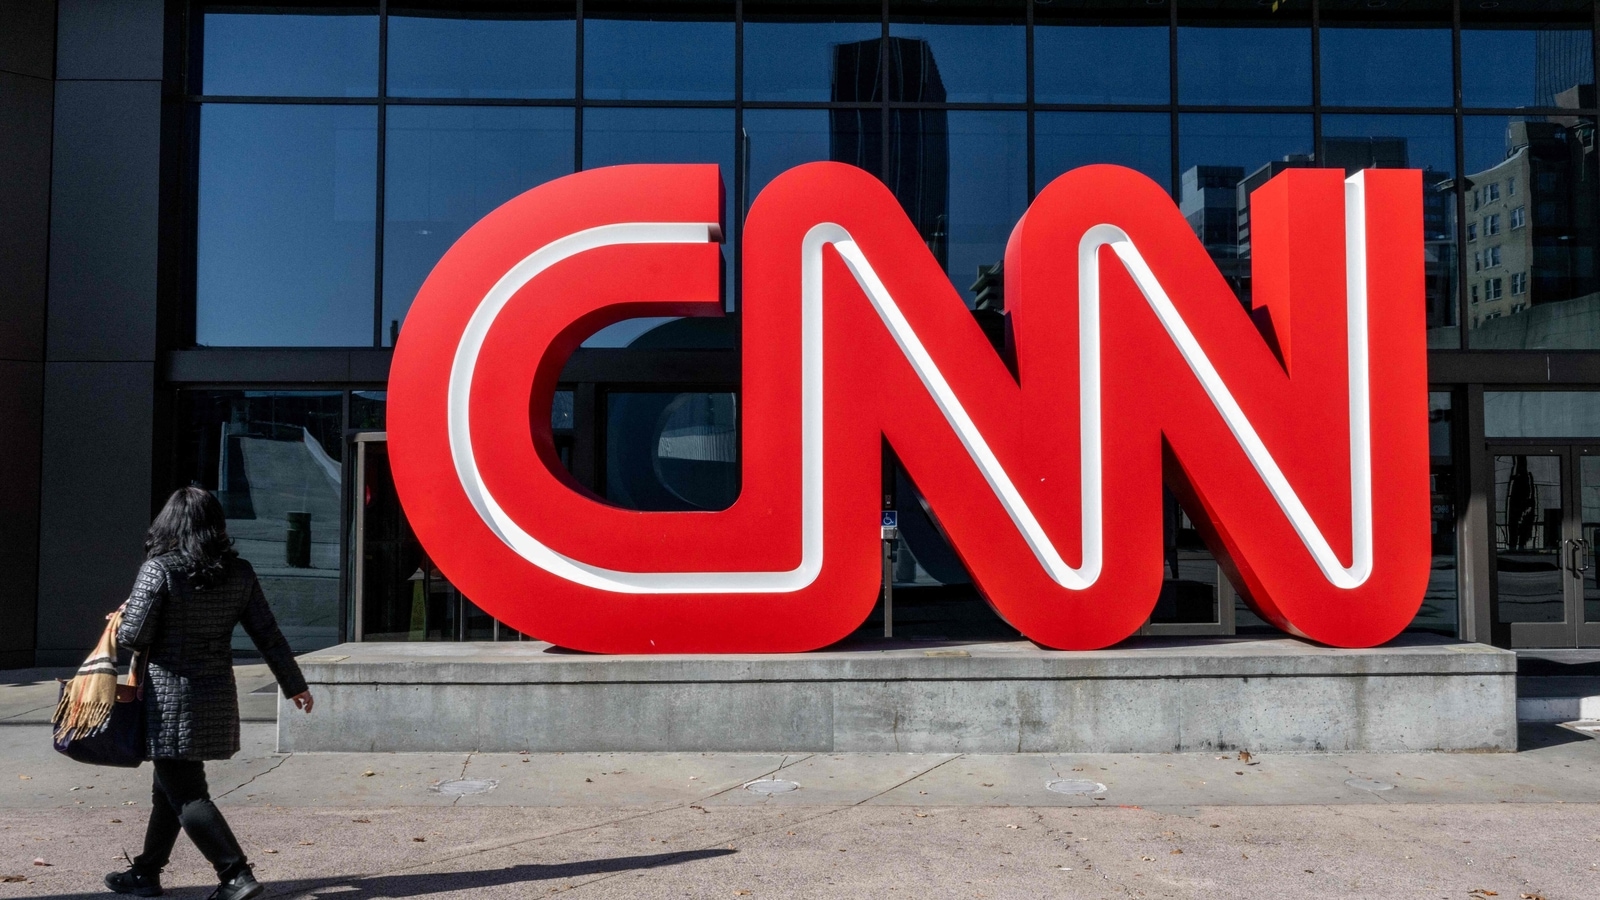 CNN, Vox, Washington Post: US media giants announce layoffs amid economic gloom | World News - Hindustan Times